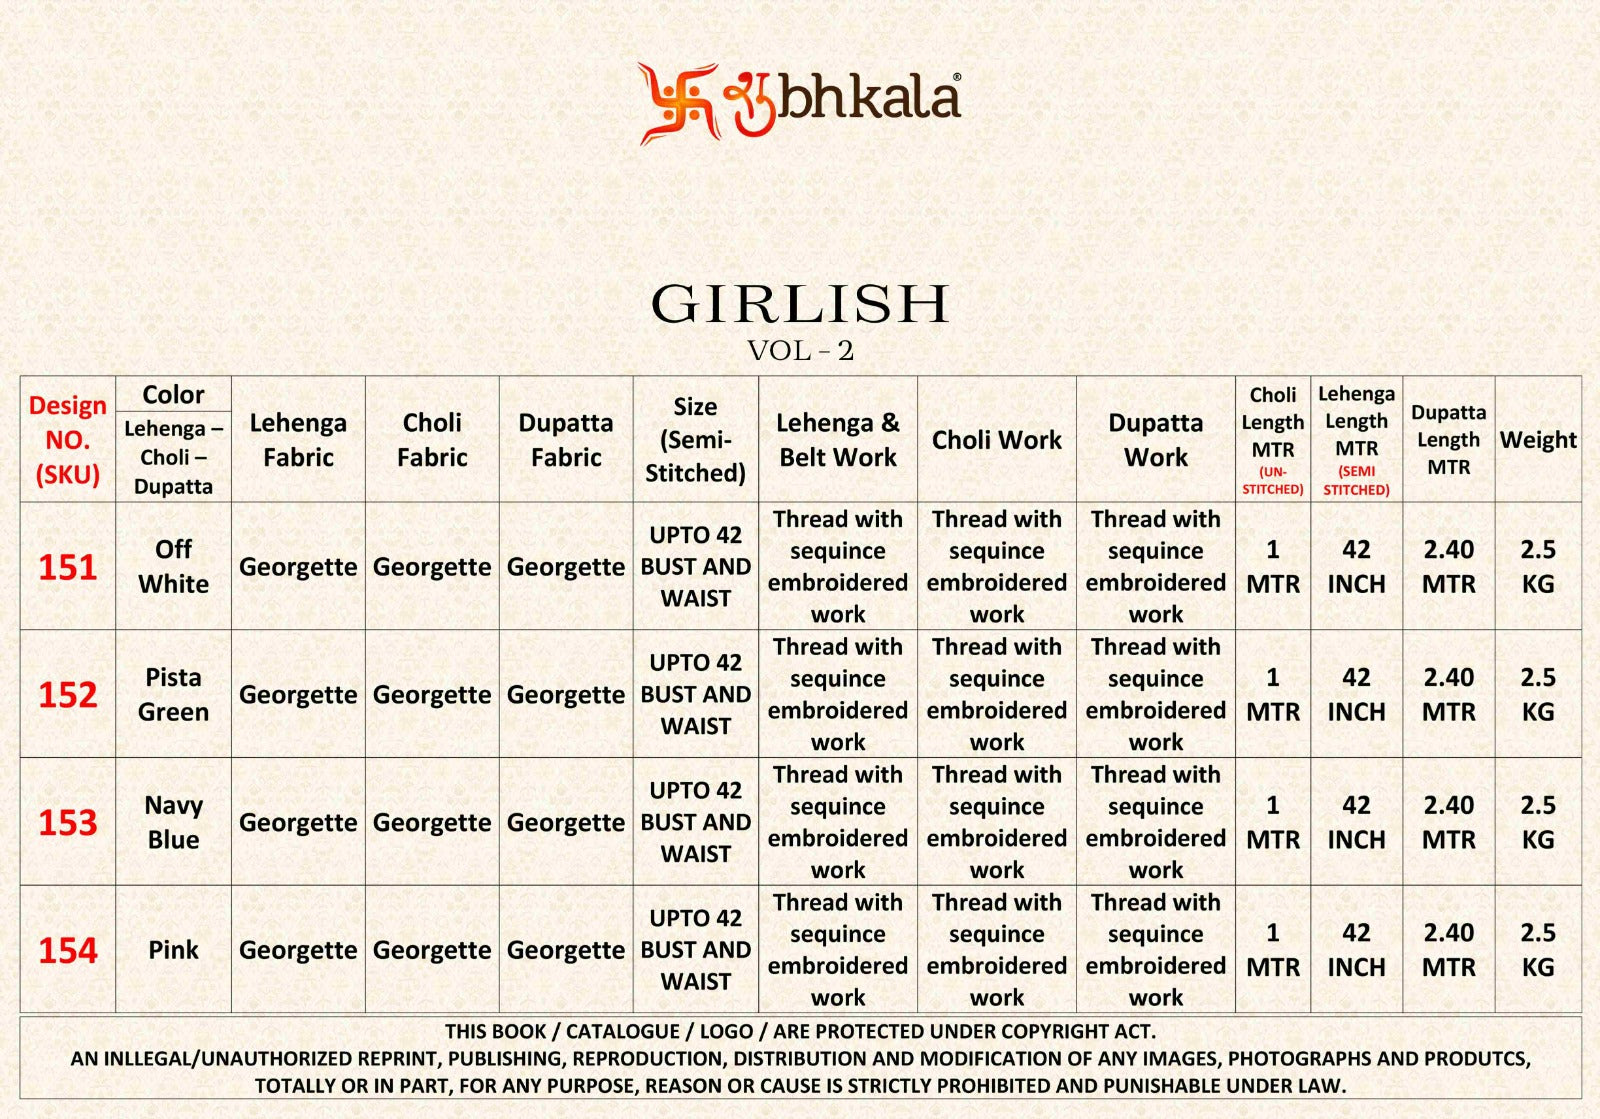 Girlish Vol 2 Shubhkala Georgette Lehenga Choli